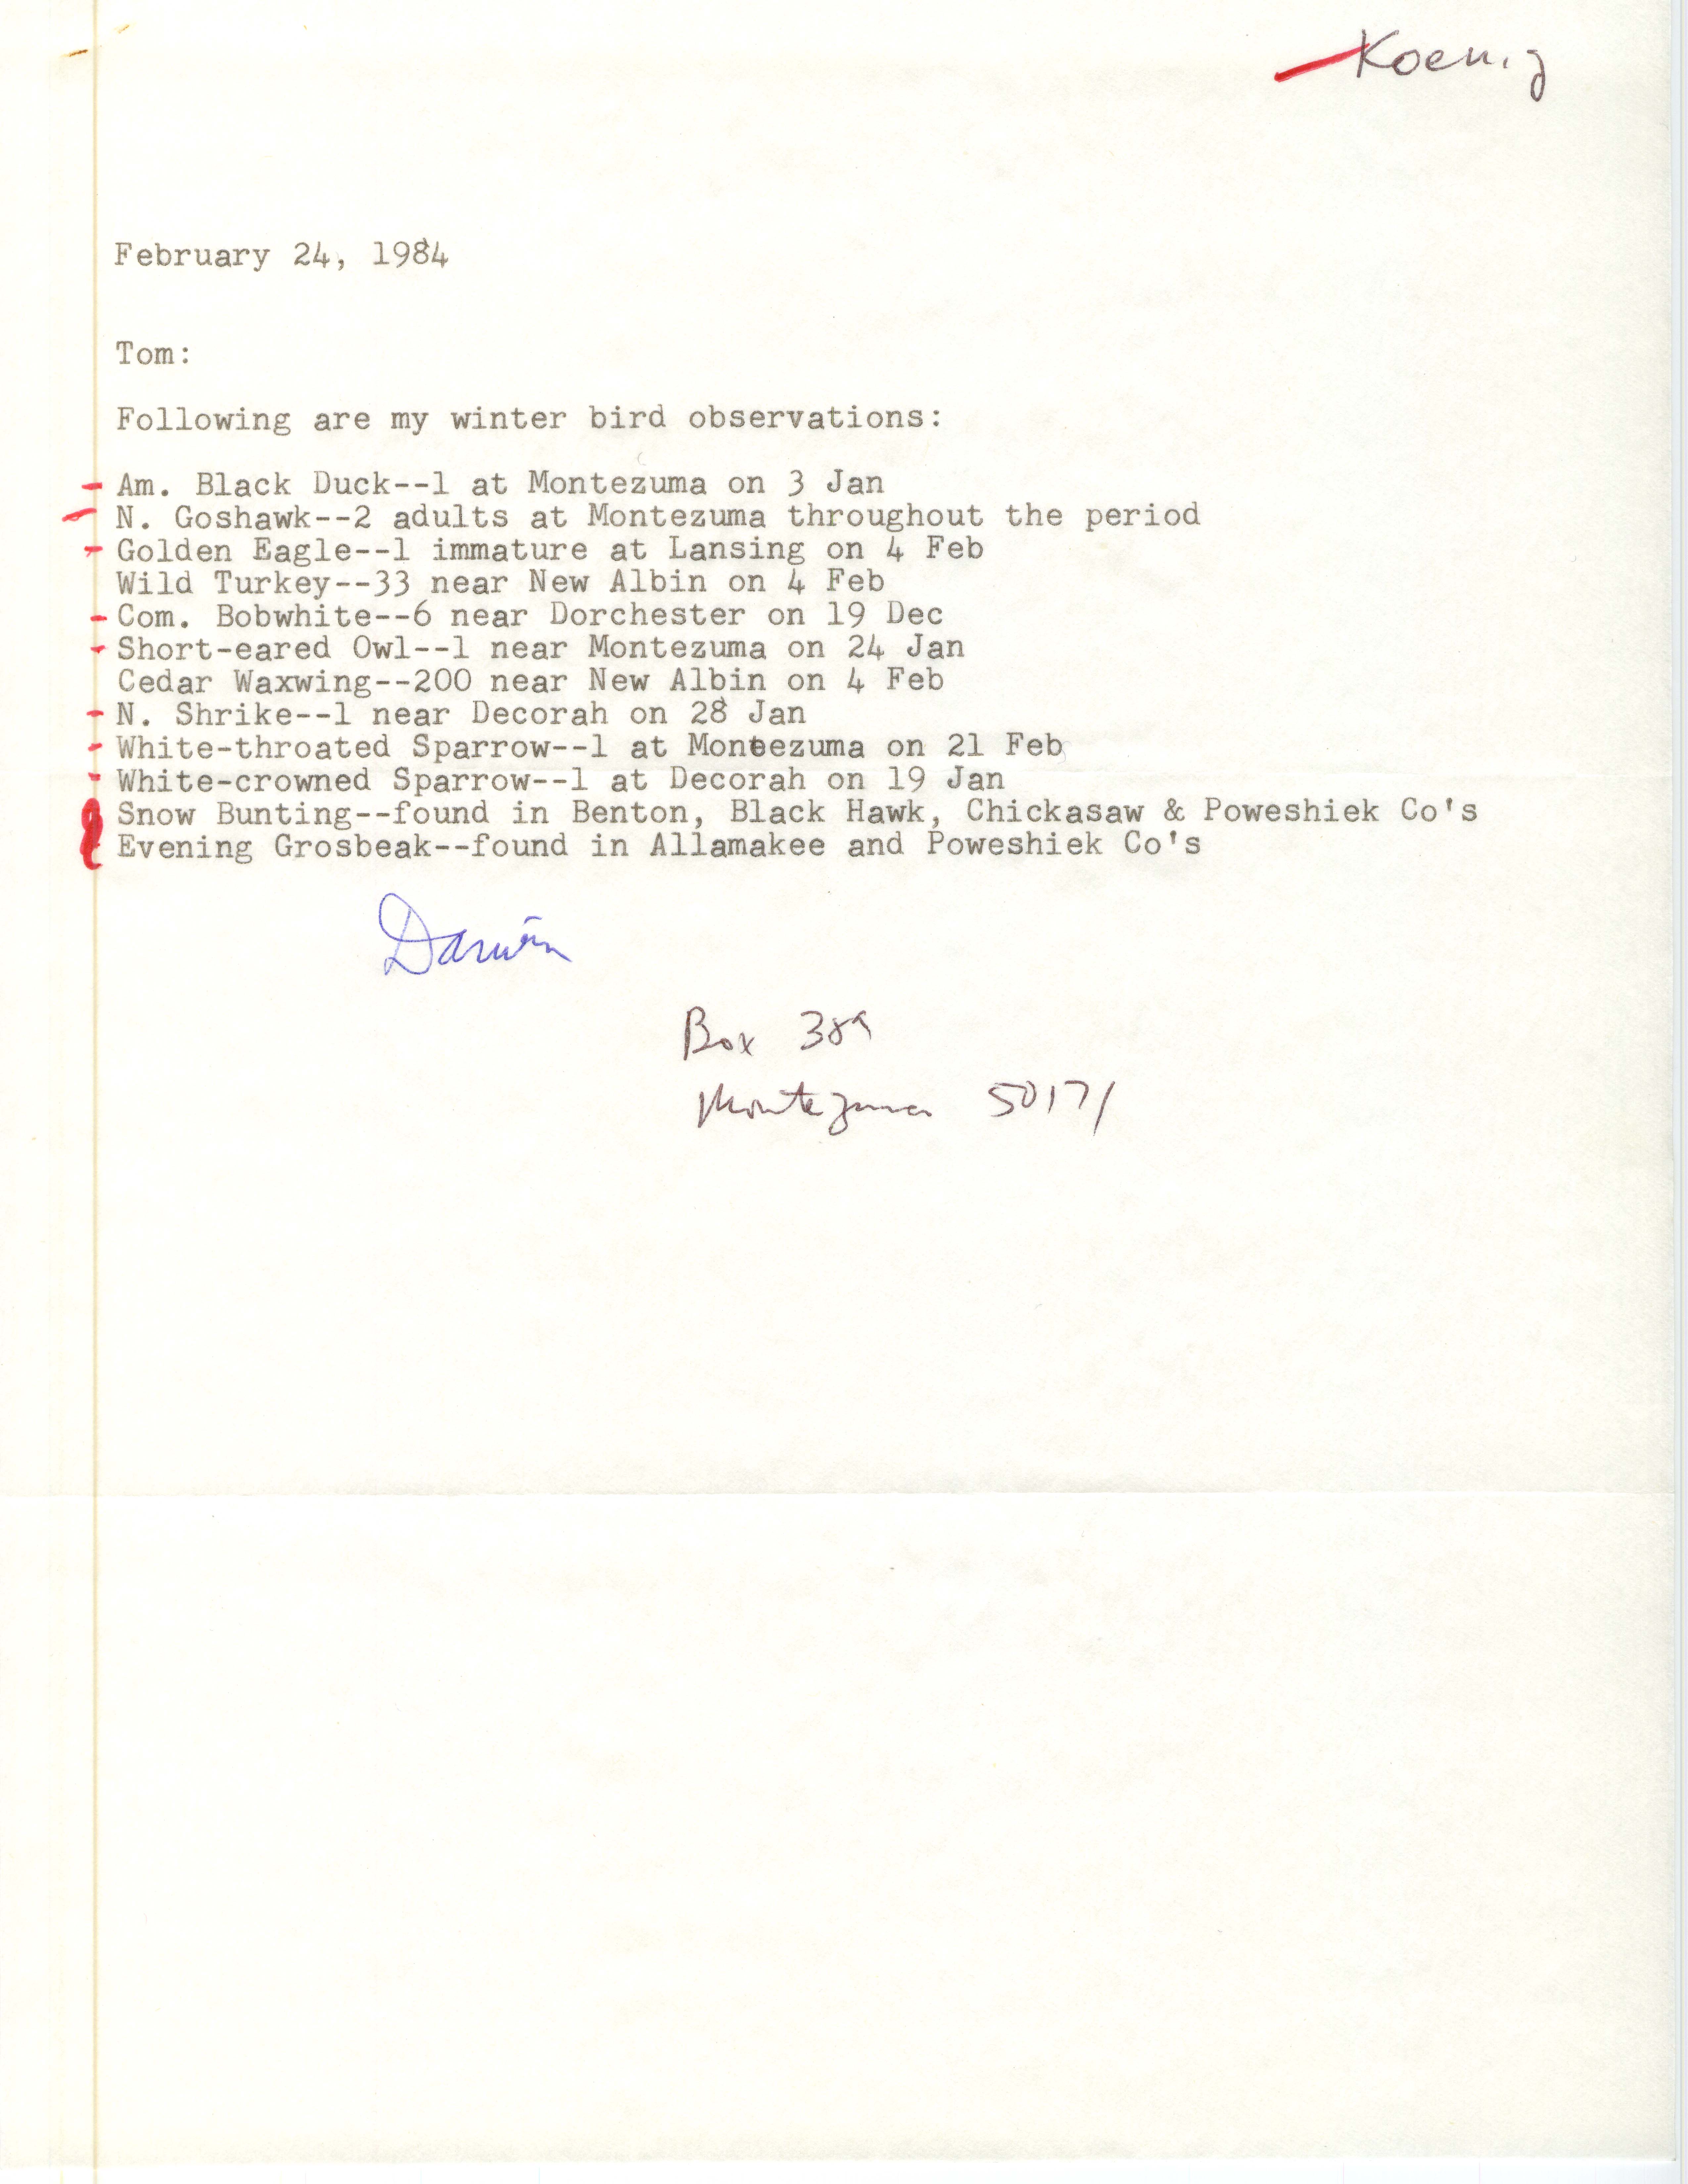 Darwin Koenig letter to Thomas H. Kent regarding winter birds sighted, February 24, 1984